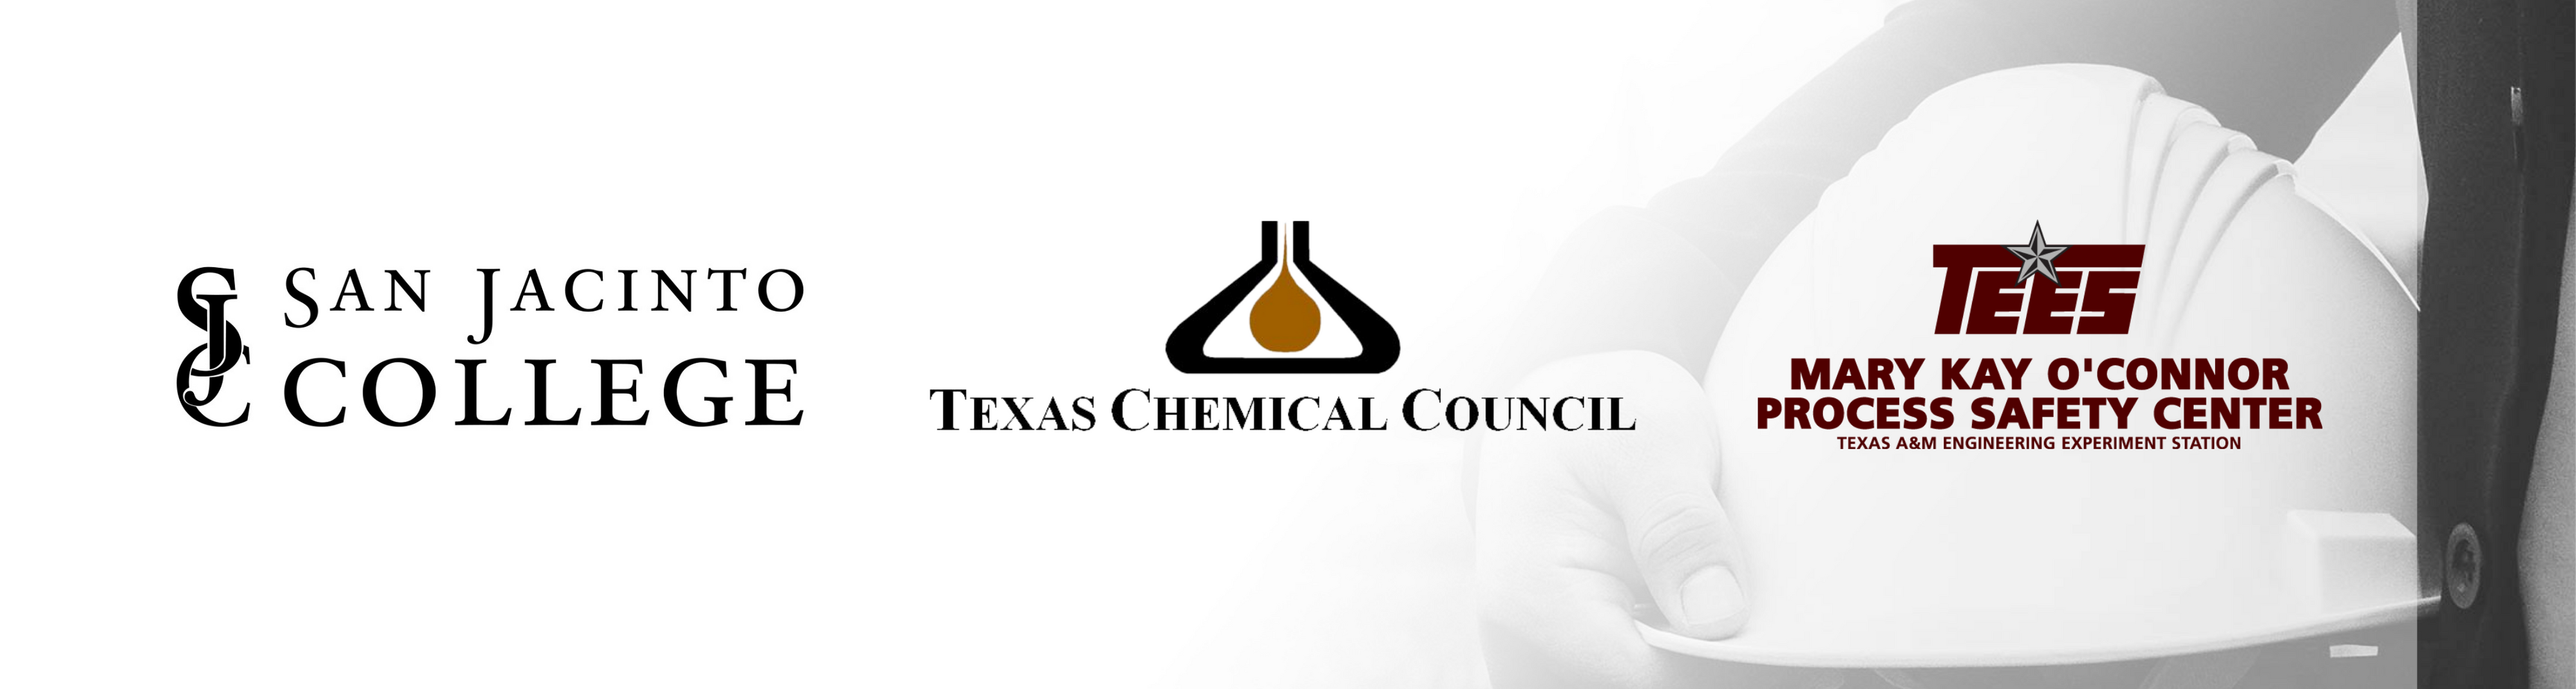 San Jacinto College, Texas Chemical Council, MKOPSC